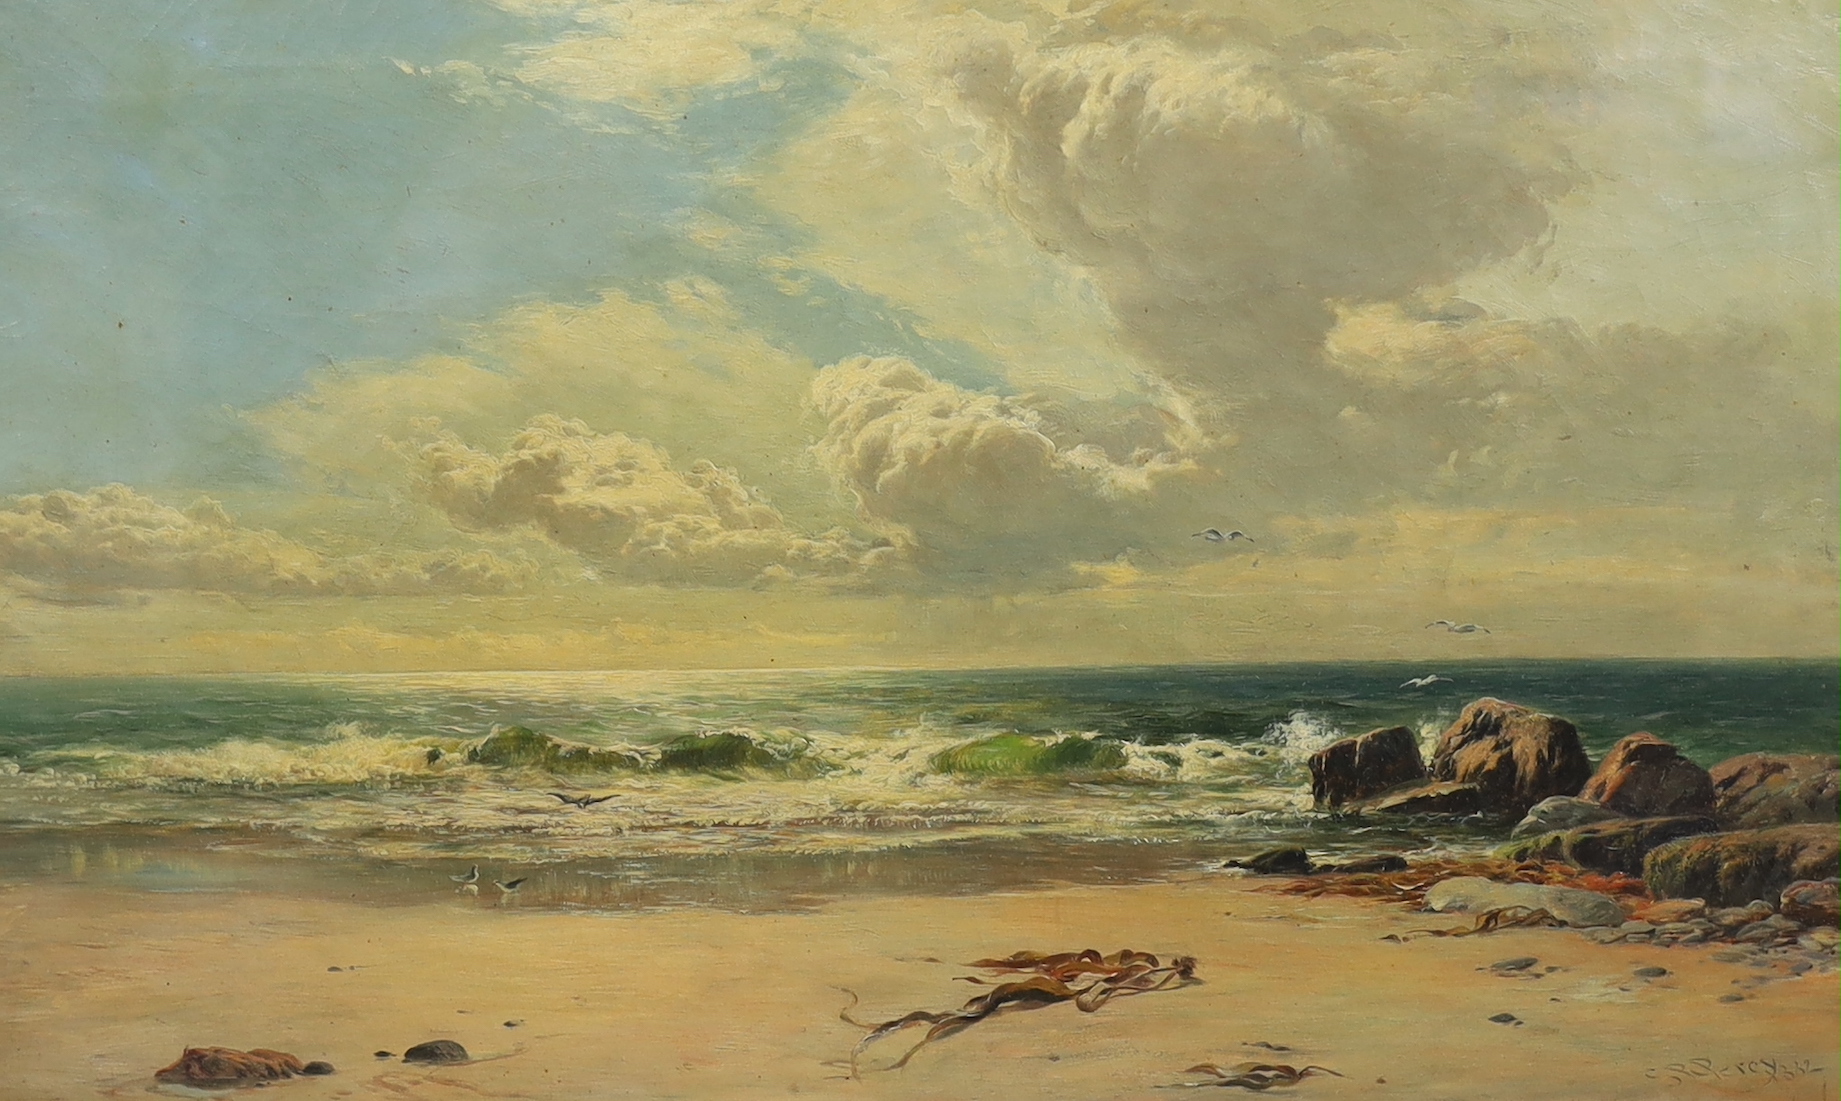 Sidney Richard Percy (British, 1821-1886), 'No 2. A Bit of The Atlantic', oil on canvas, 40 x 65cm